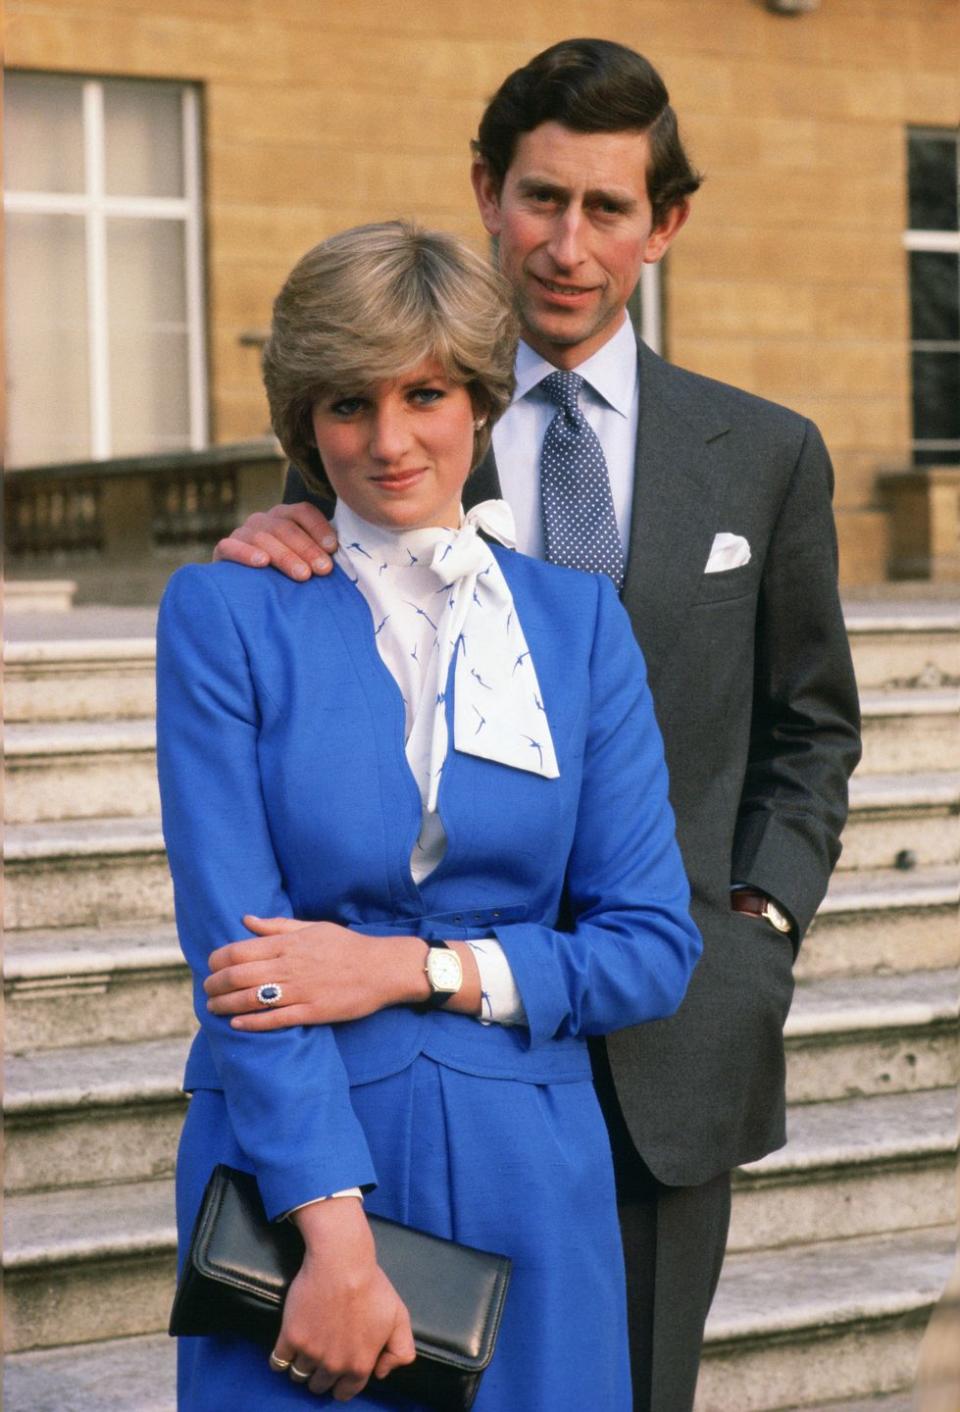 1986: Prince Charles Cheats on Princess Diana